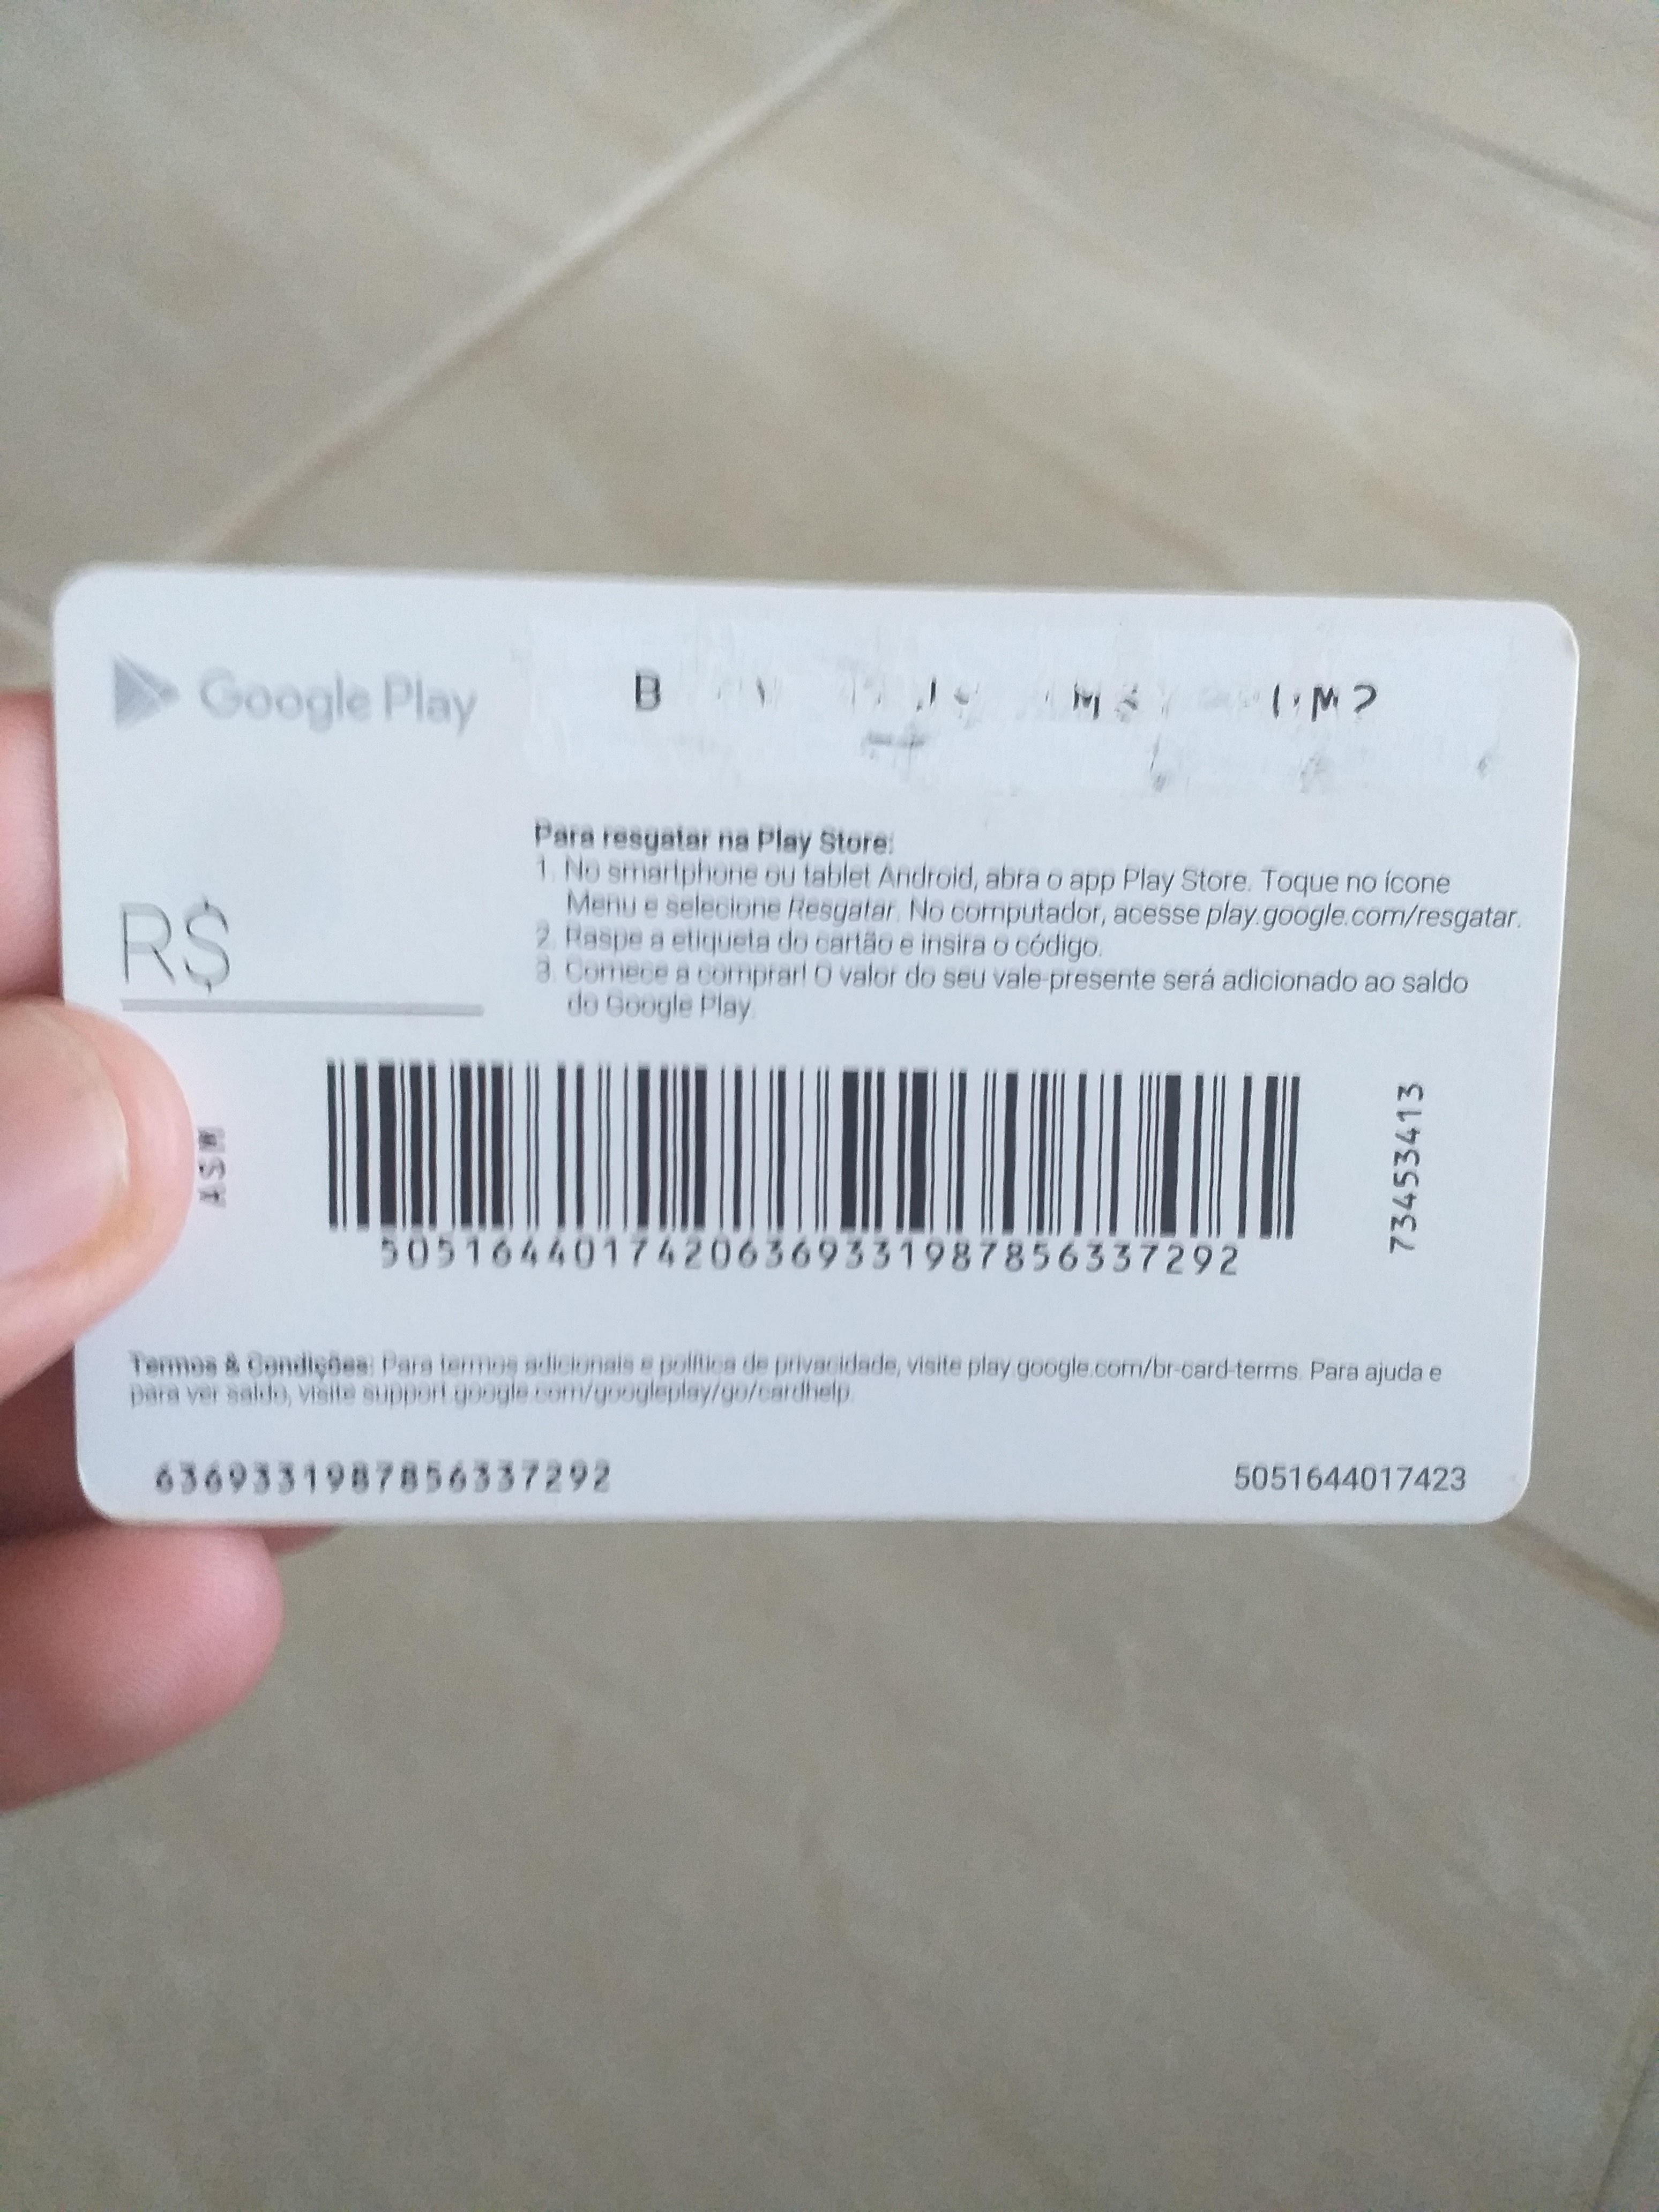 Como ler o código de um gift card danificado? - Comunidade Google Play